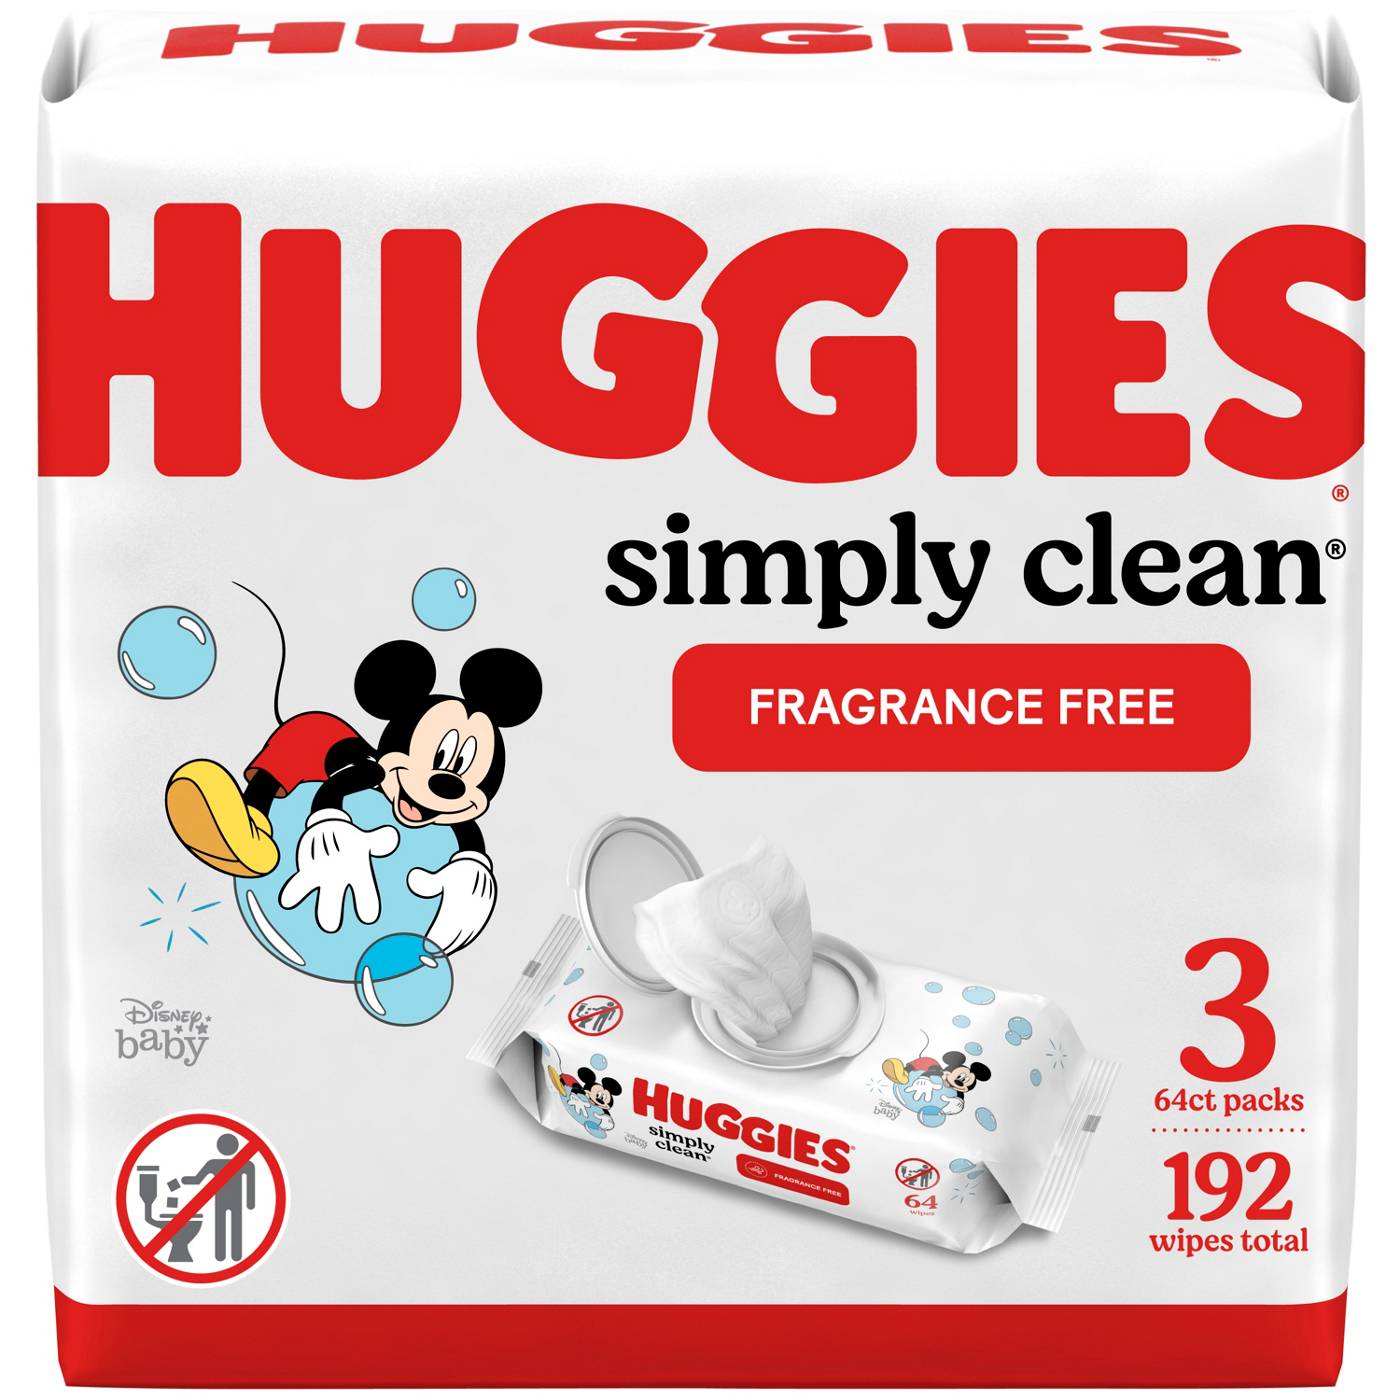 Huggies Simply Clean Fragrance Free Wipes 3 Pk; image 1 of 2